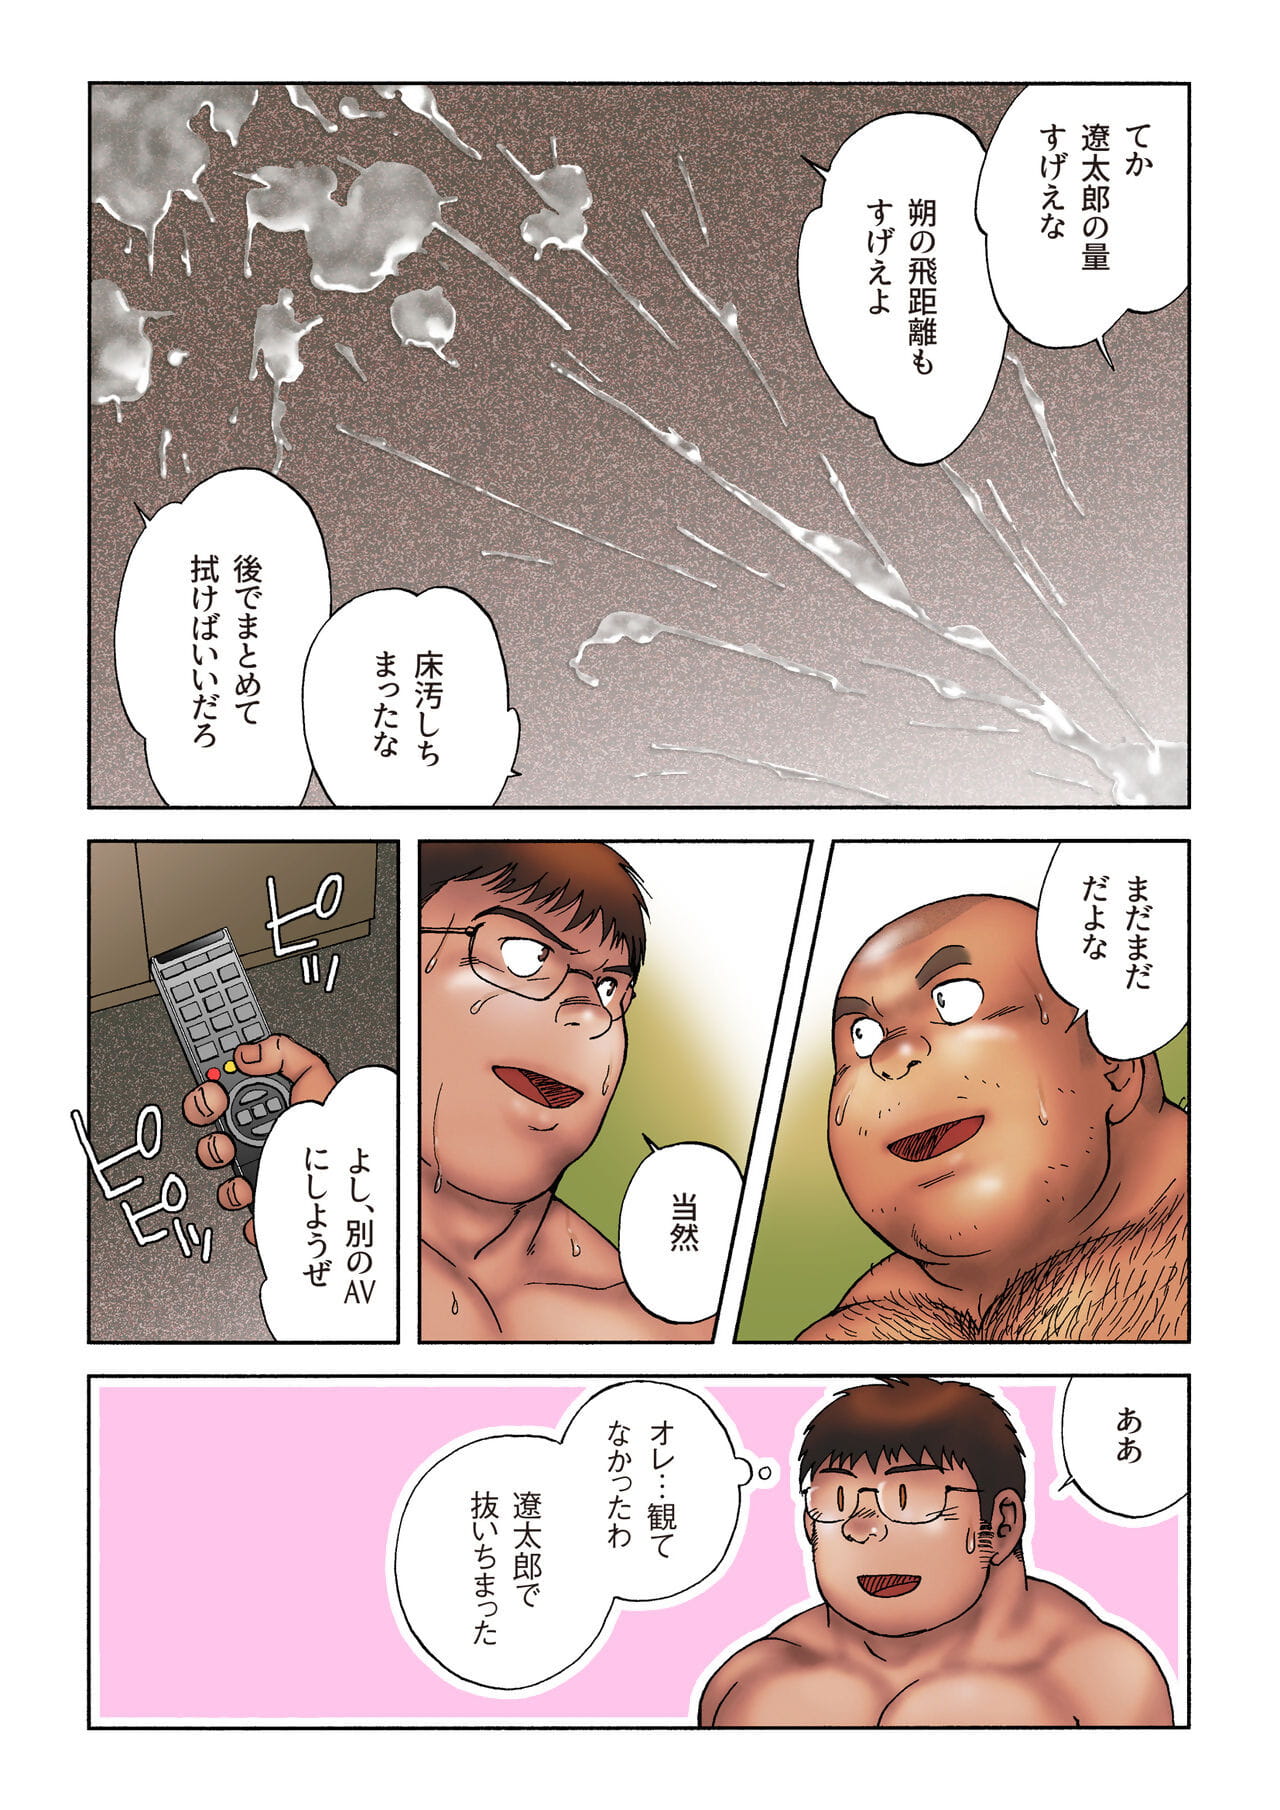 Danshi Koukousei Weightlifter Taikai-go no Hotel de no Aoi Yoru - part 2 page 1